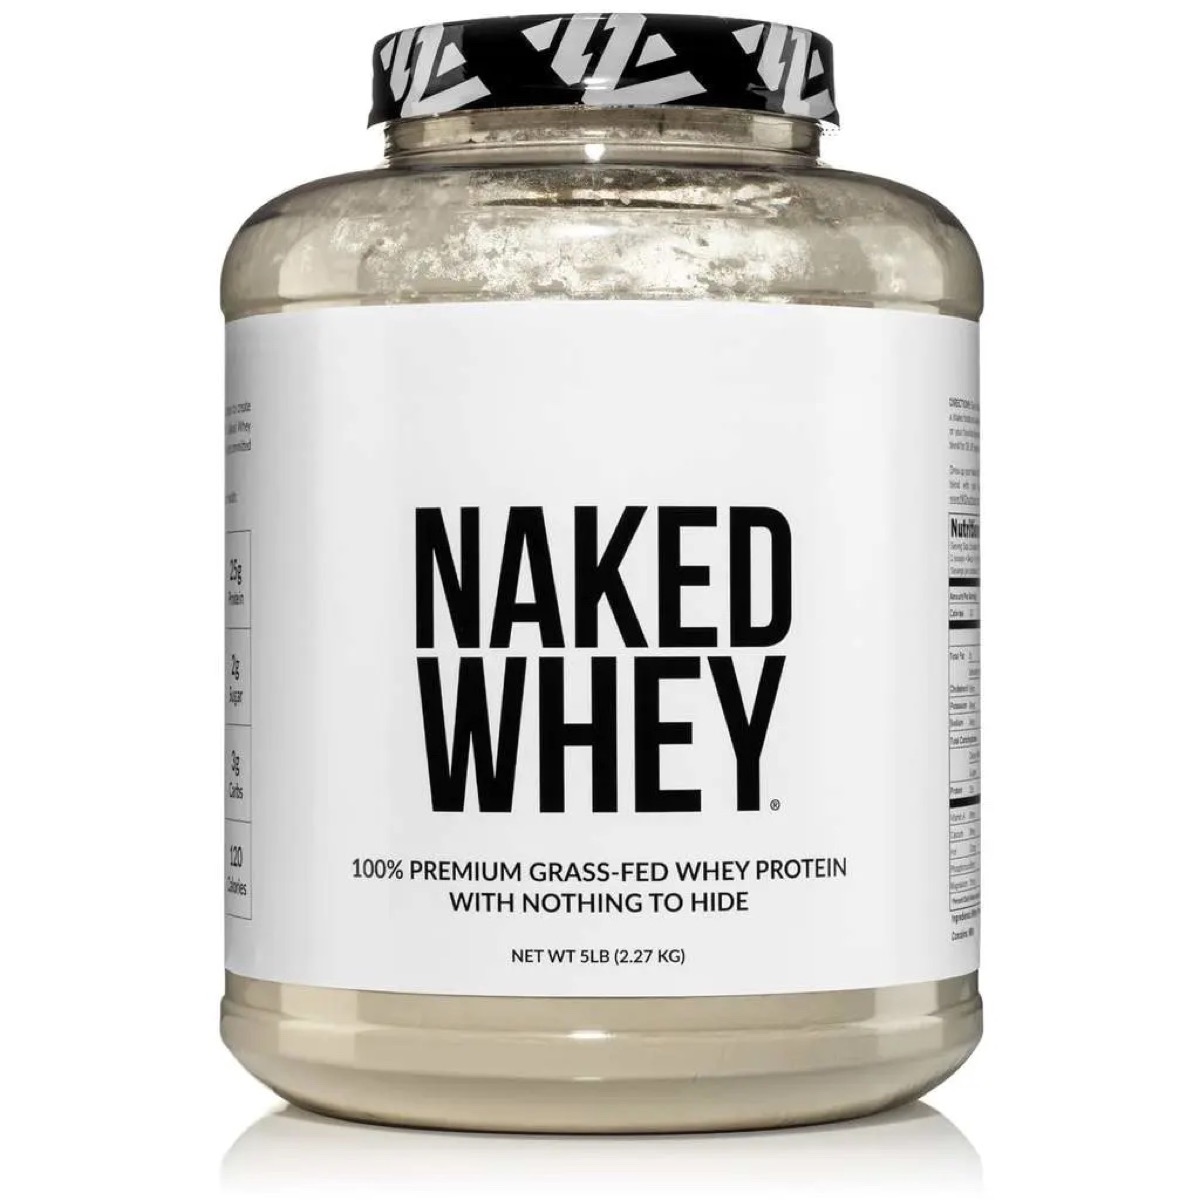 jar of naked whey protein powder on white background